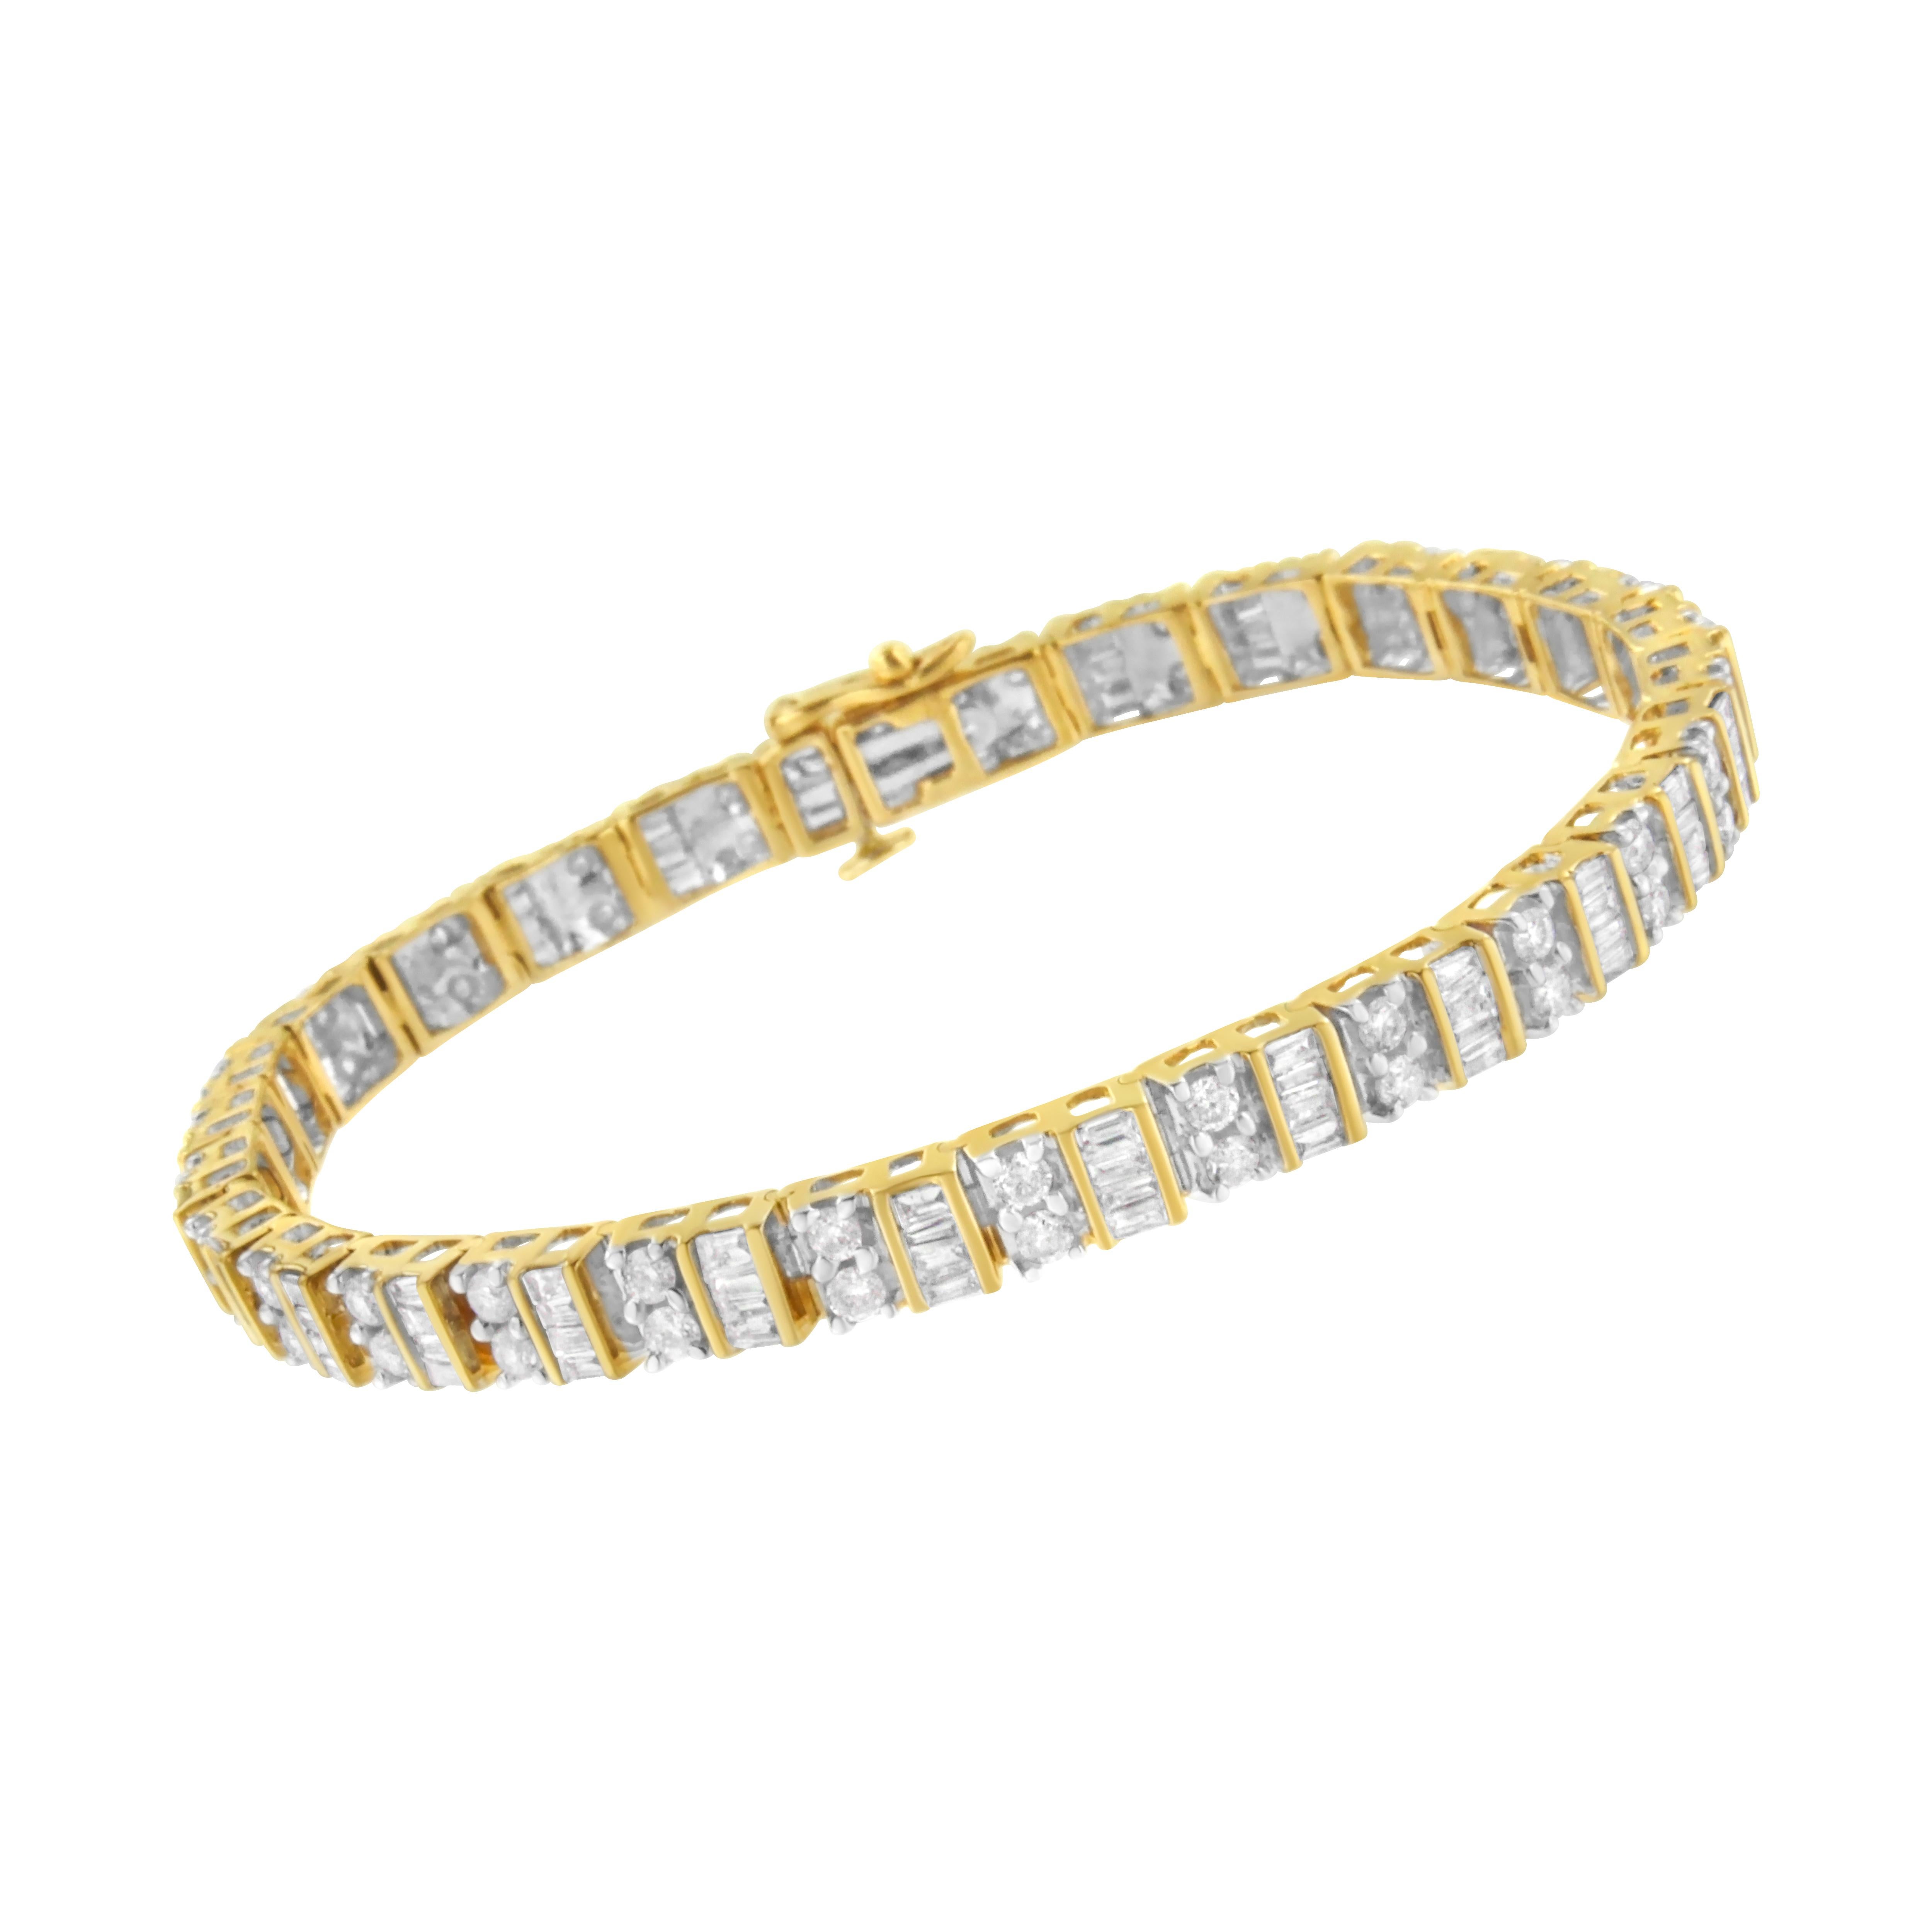 4ct diamond tennis bracelet